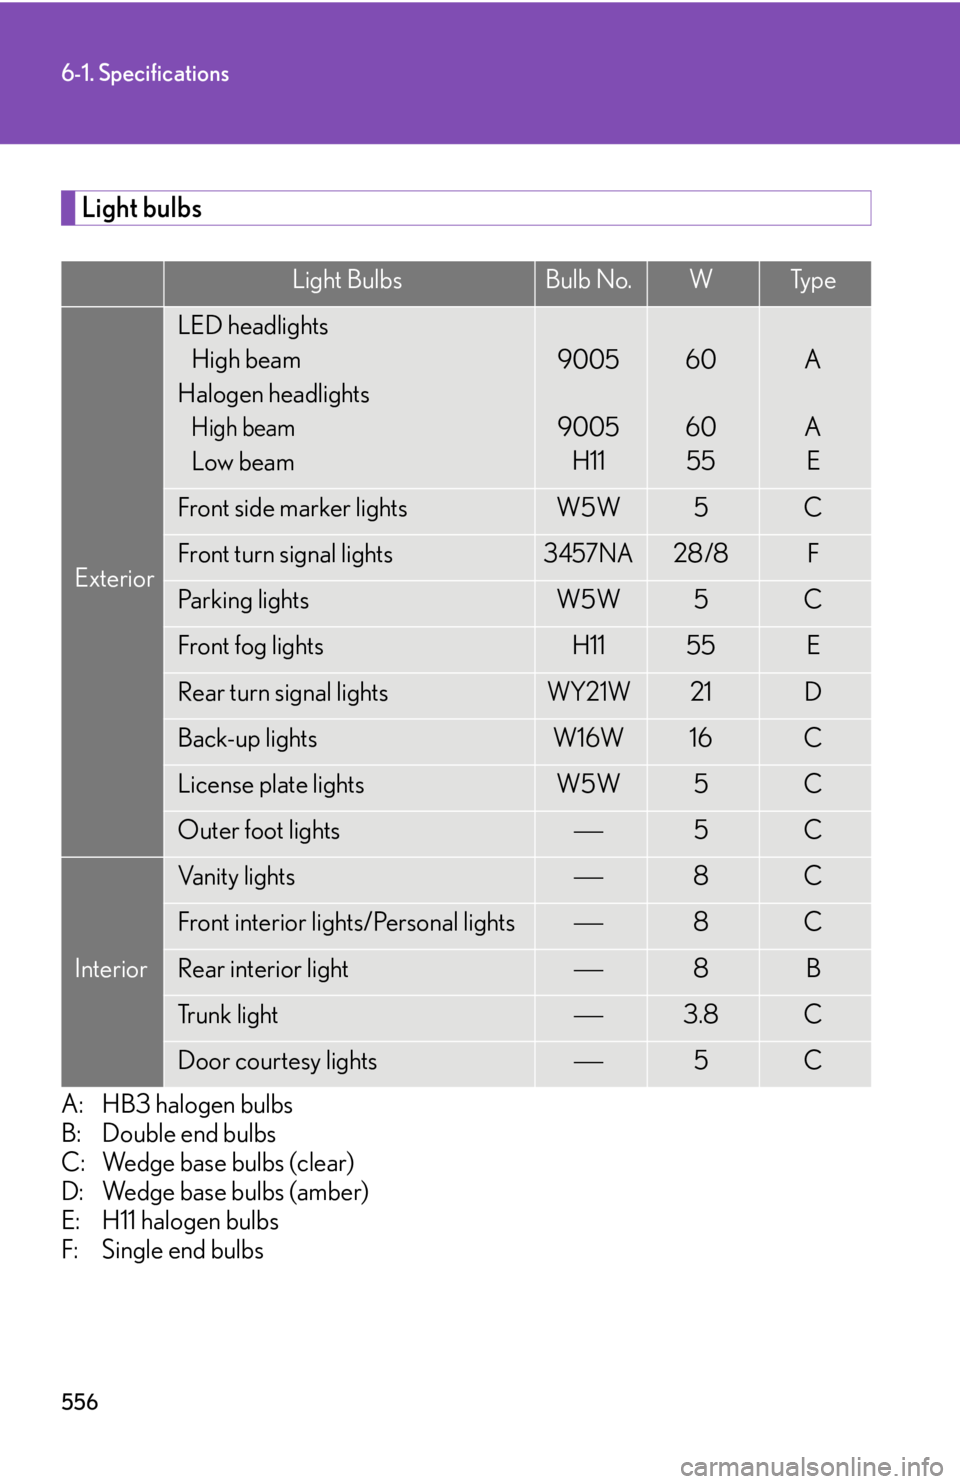 Lexus HS250h 2010  Basic Information Before Operation / LEXUS 2010 HS250H OWNERS MANUAL (OM75006U) 556
6-1. Specifications
Light bulbs
A: HB3 halogen bulbs
B: Double end bulbs 
C: Wedge base bulbs (clear) 
D: Wedge base bulbs (amber) 
E: H11 halogen bulbs 
F: Single end bulbs
Light B